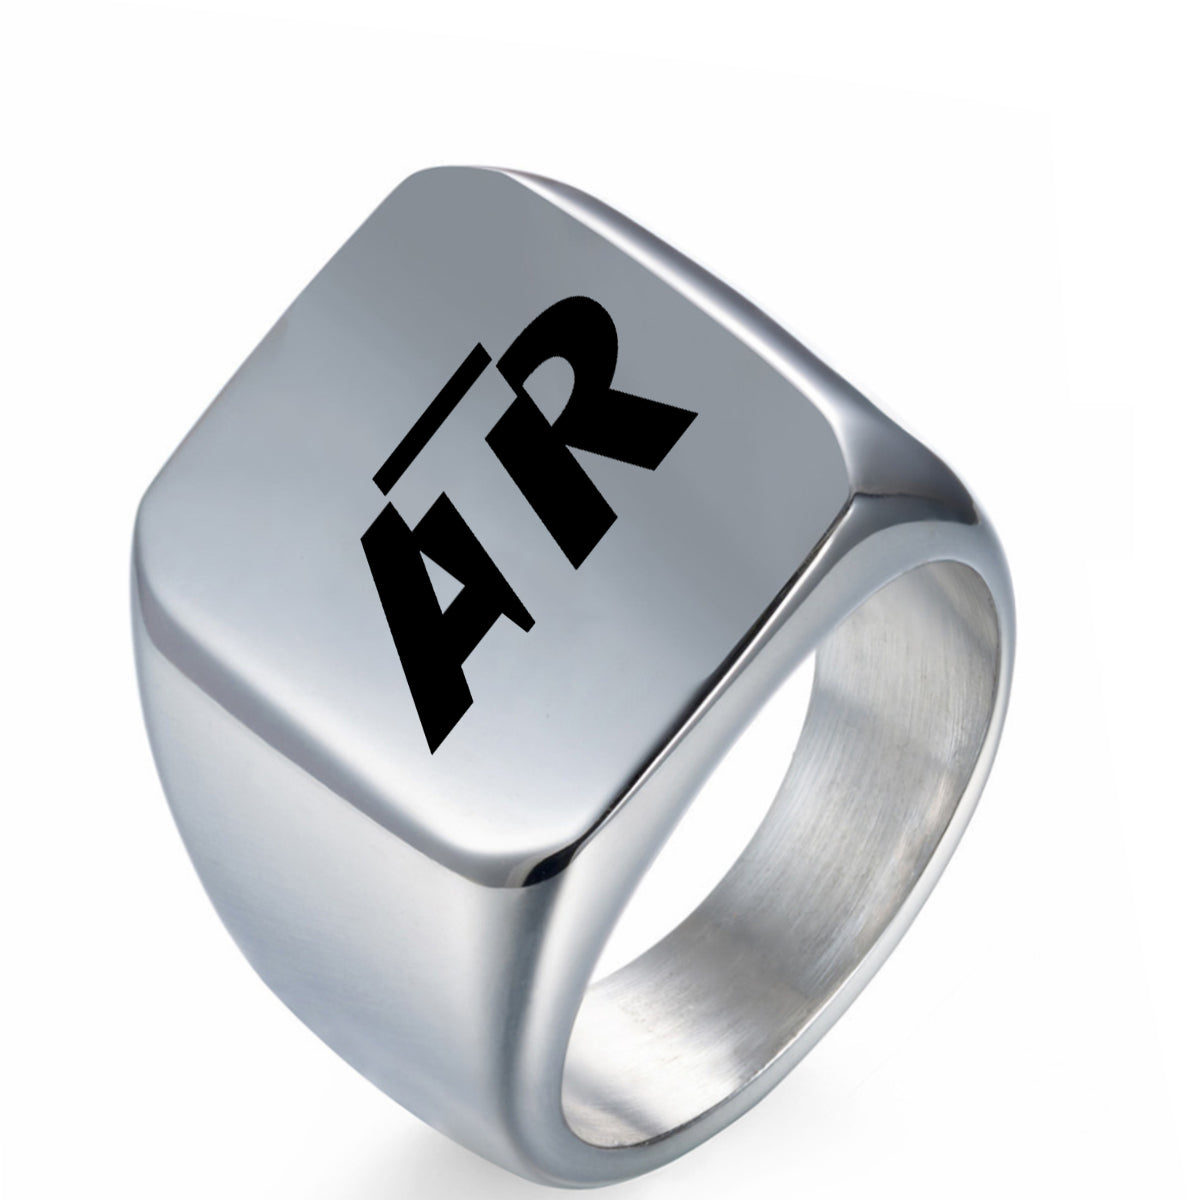 ATR & Text Designed Men Rings